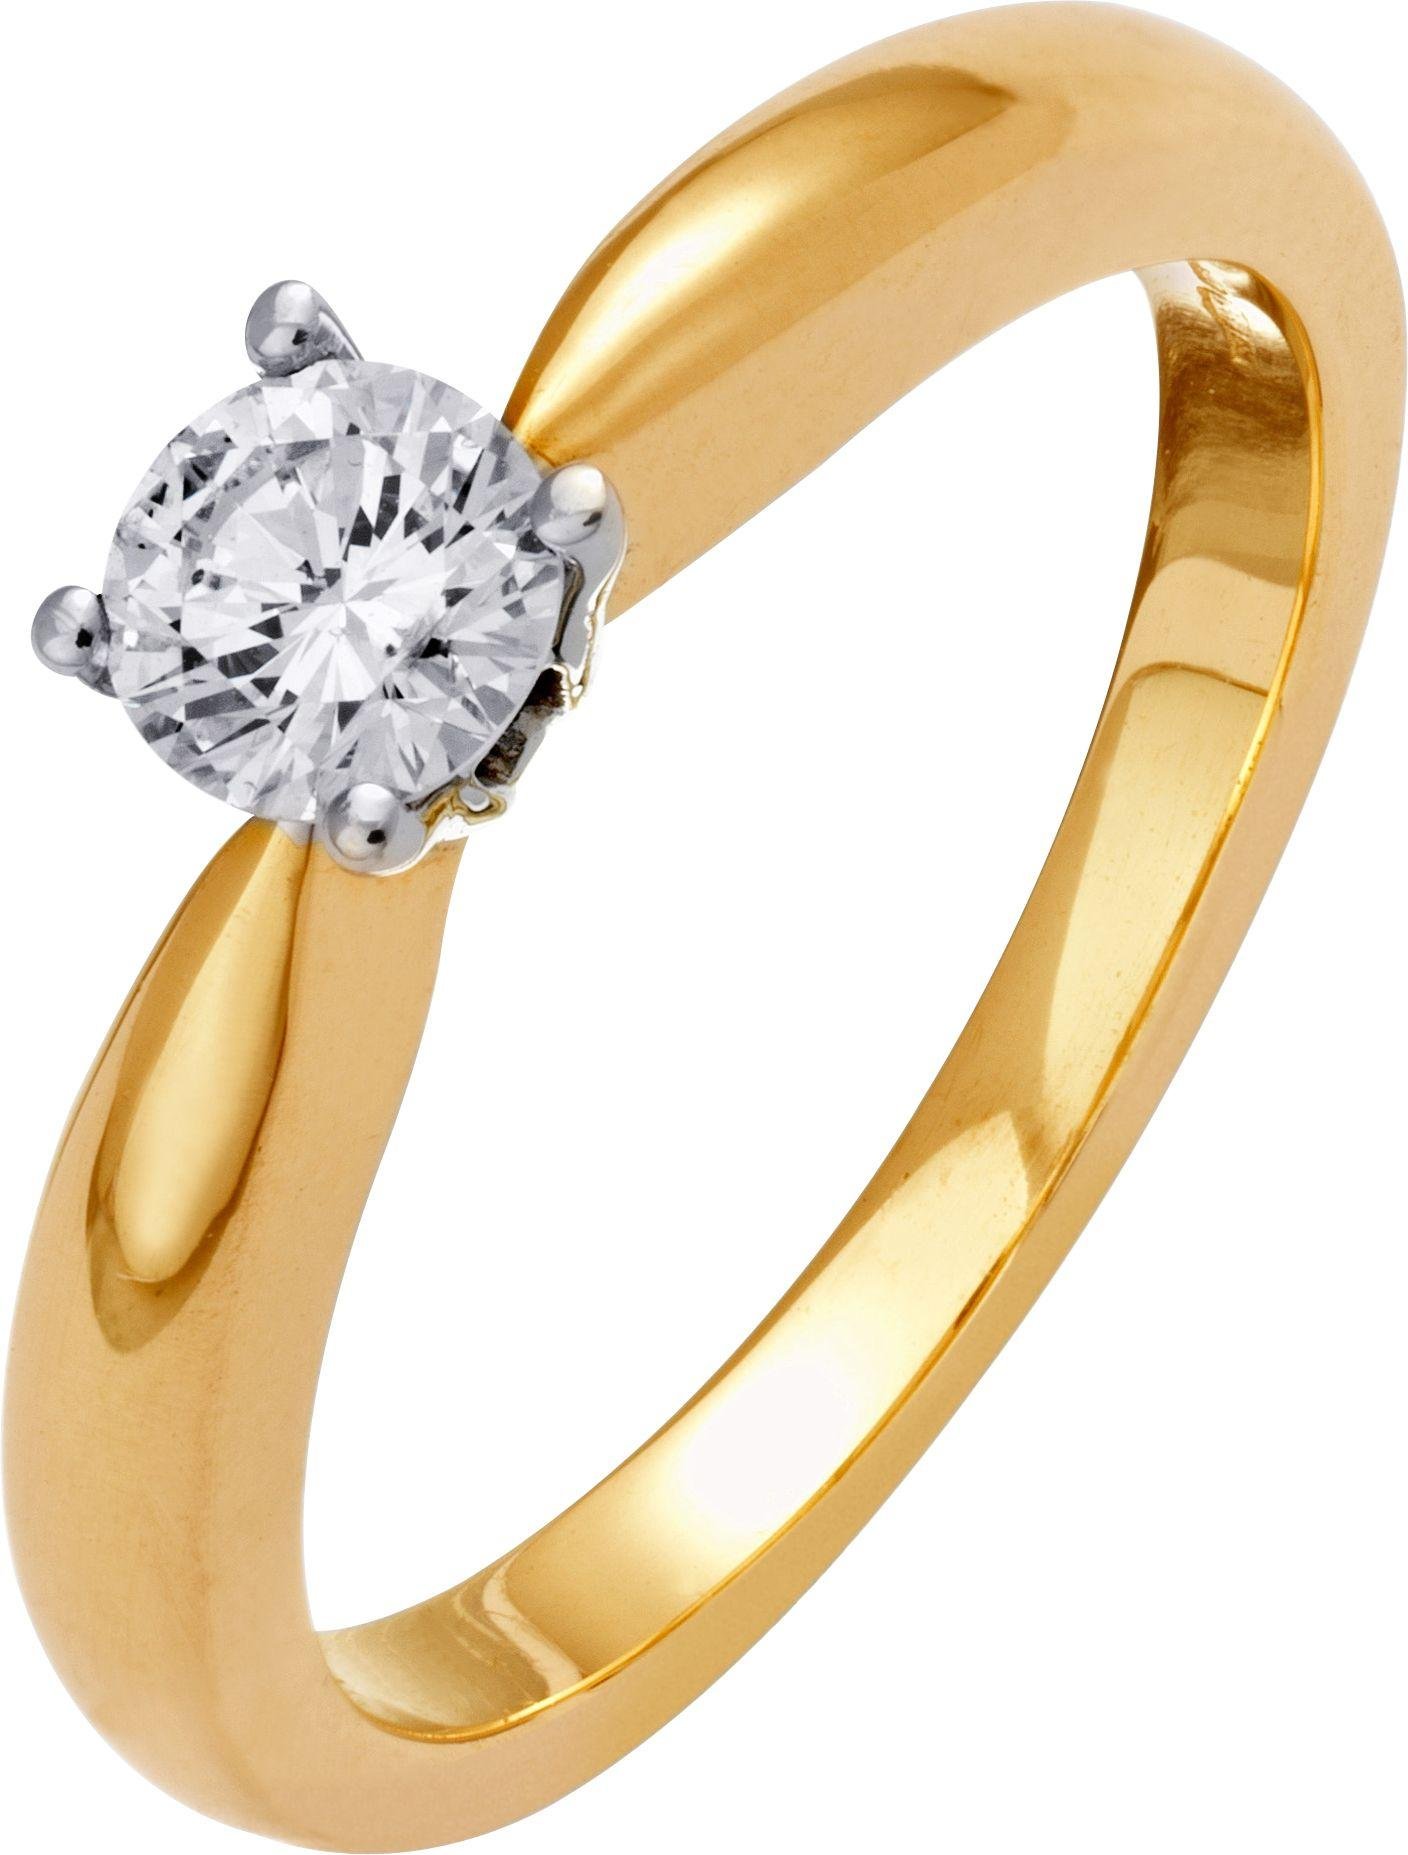 Everlasting Love 9ct Gold 0.33ct Diamond Solitaire Ring - M